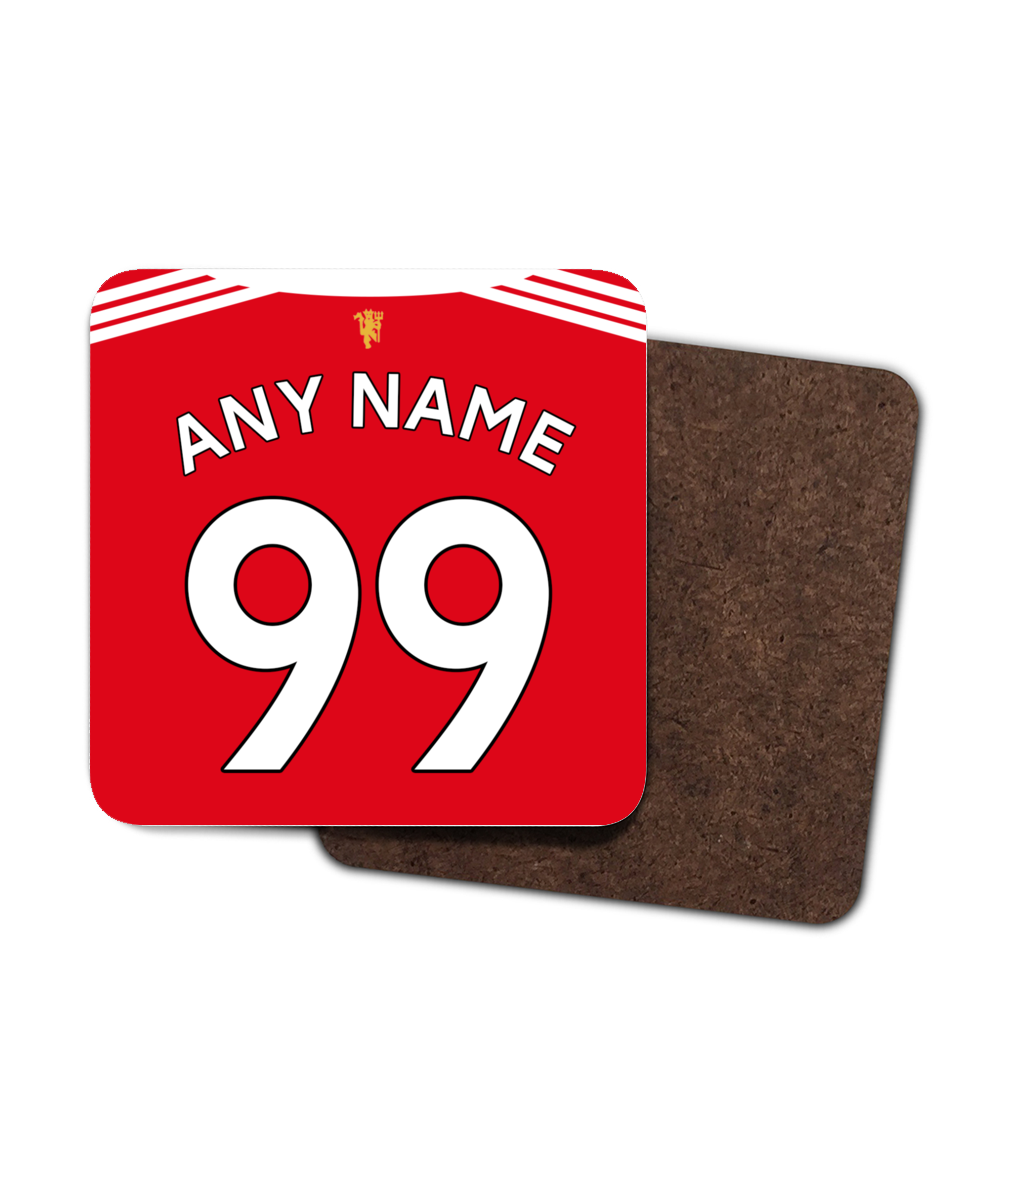 Man United - Personalised 2021/22 Home Drinks Coaster